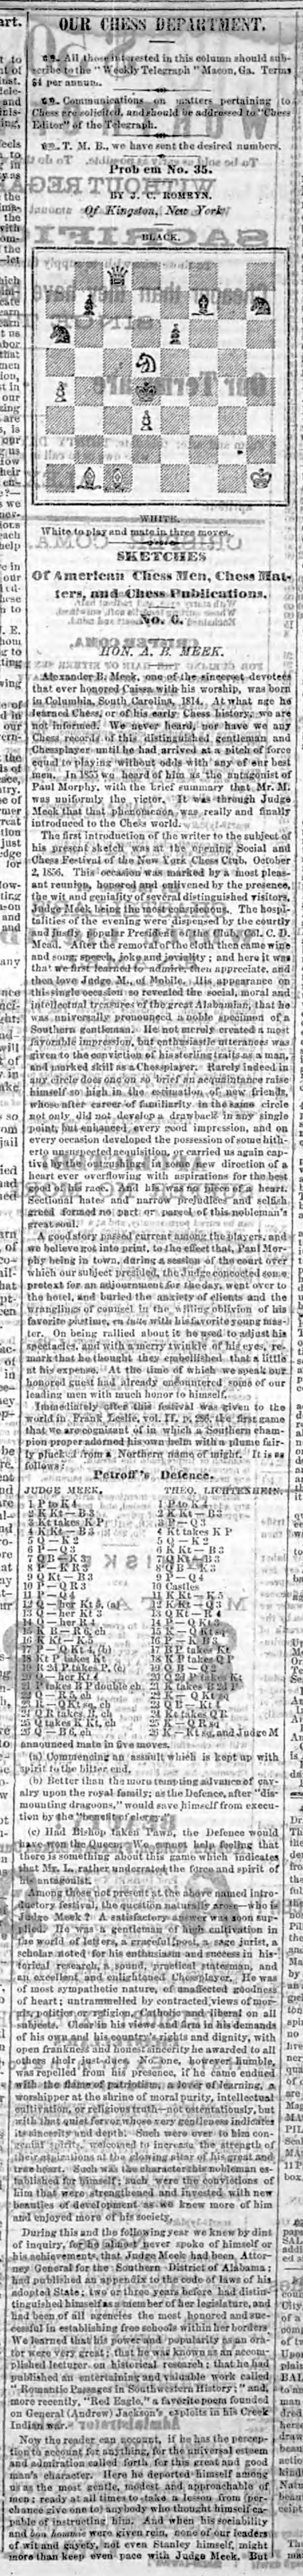 1867.05.03-01 Macon Georgia Weekly Telegraph.jpg